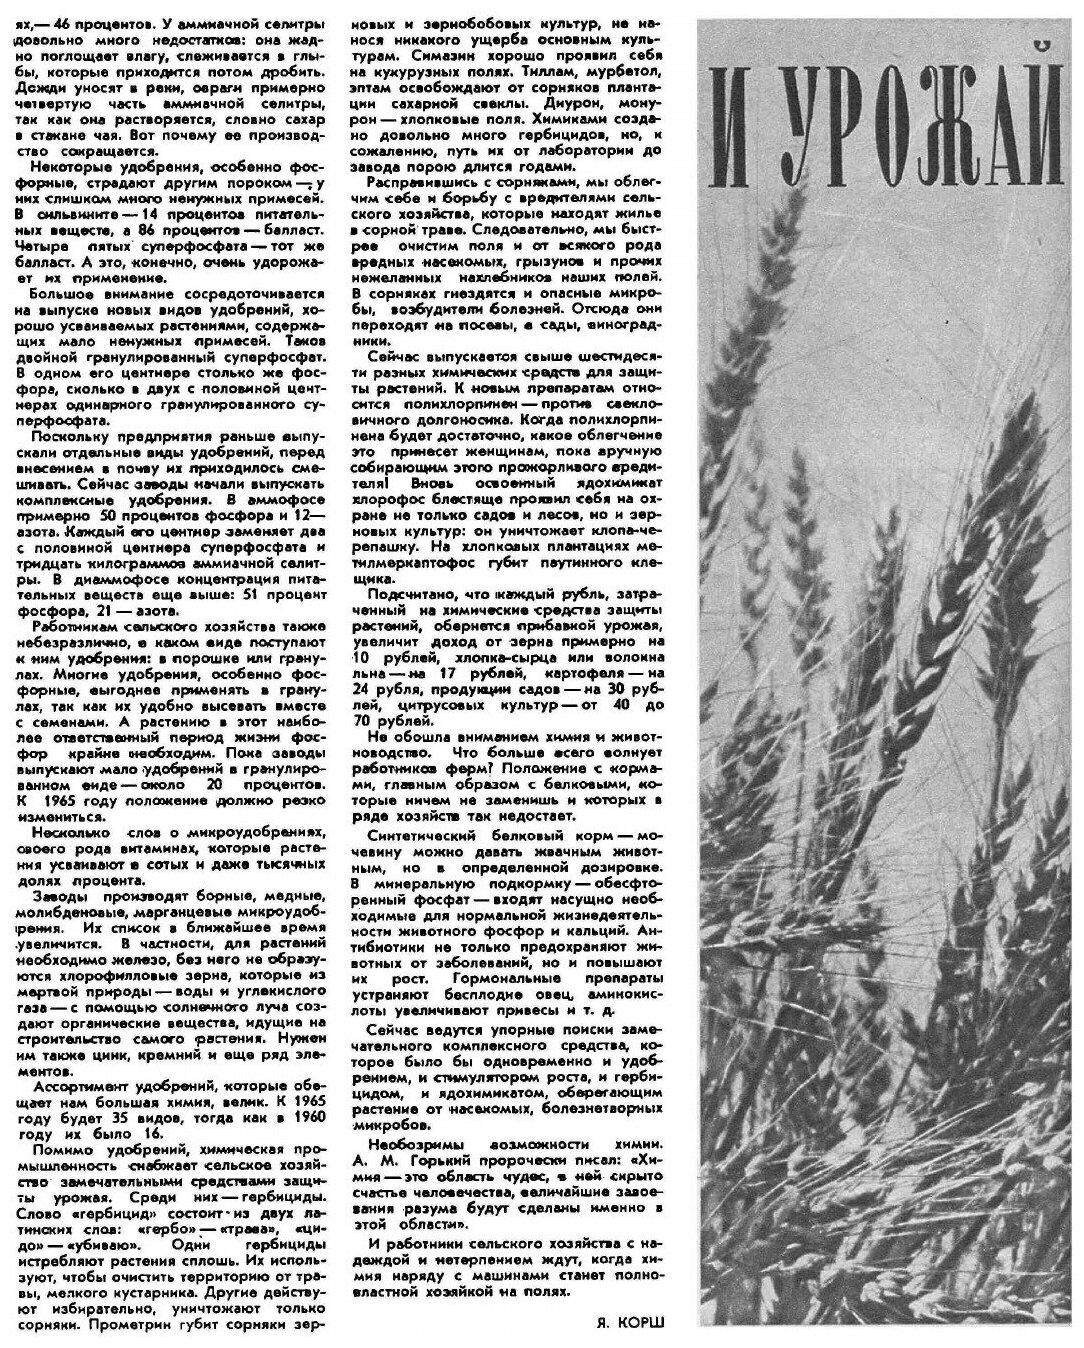 Журнал "Крестьянка". №10, октябрь 1963 - фото №3